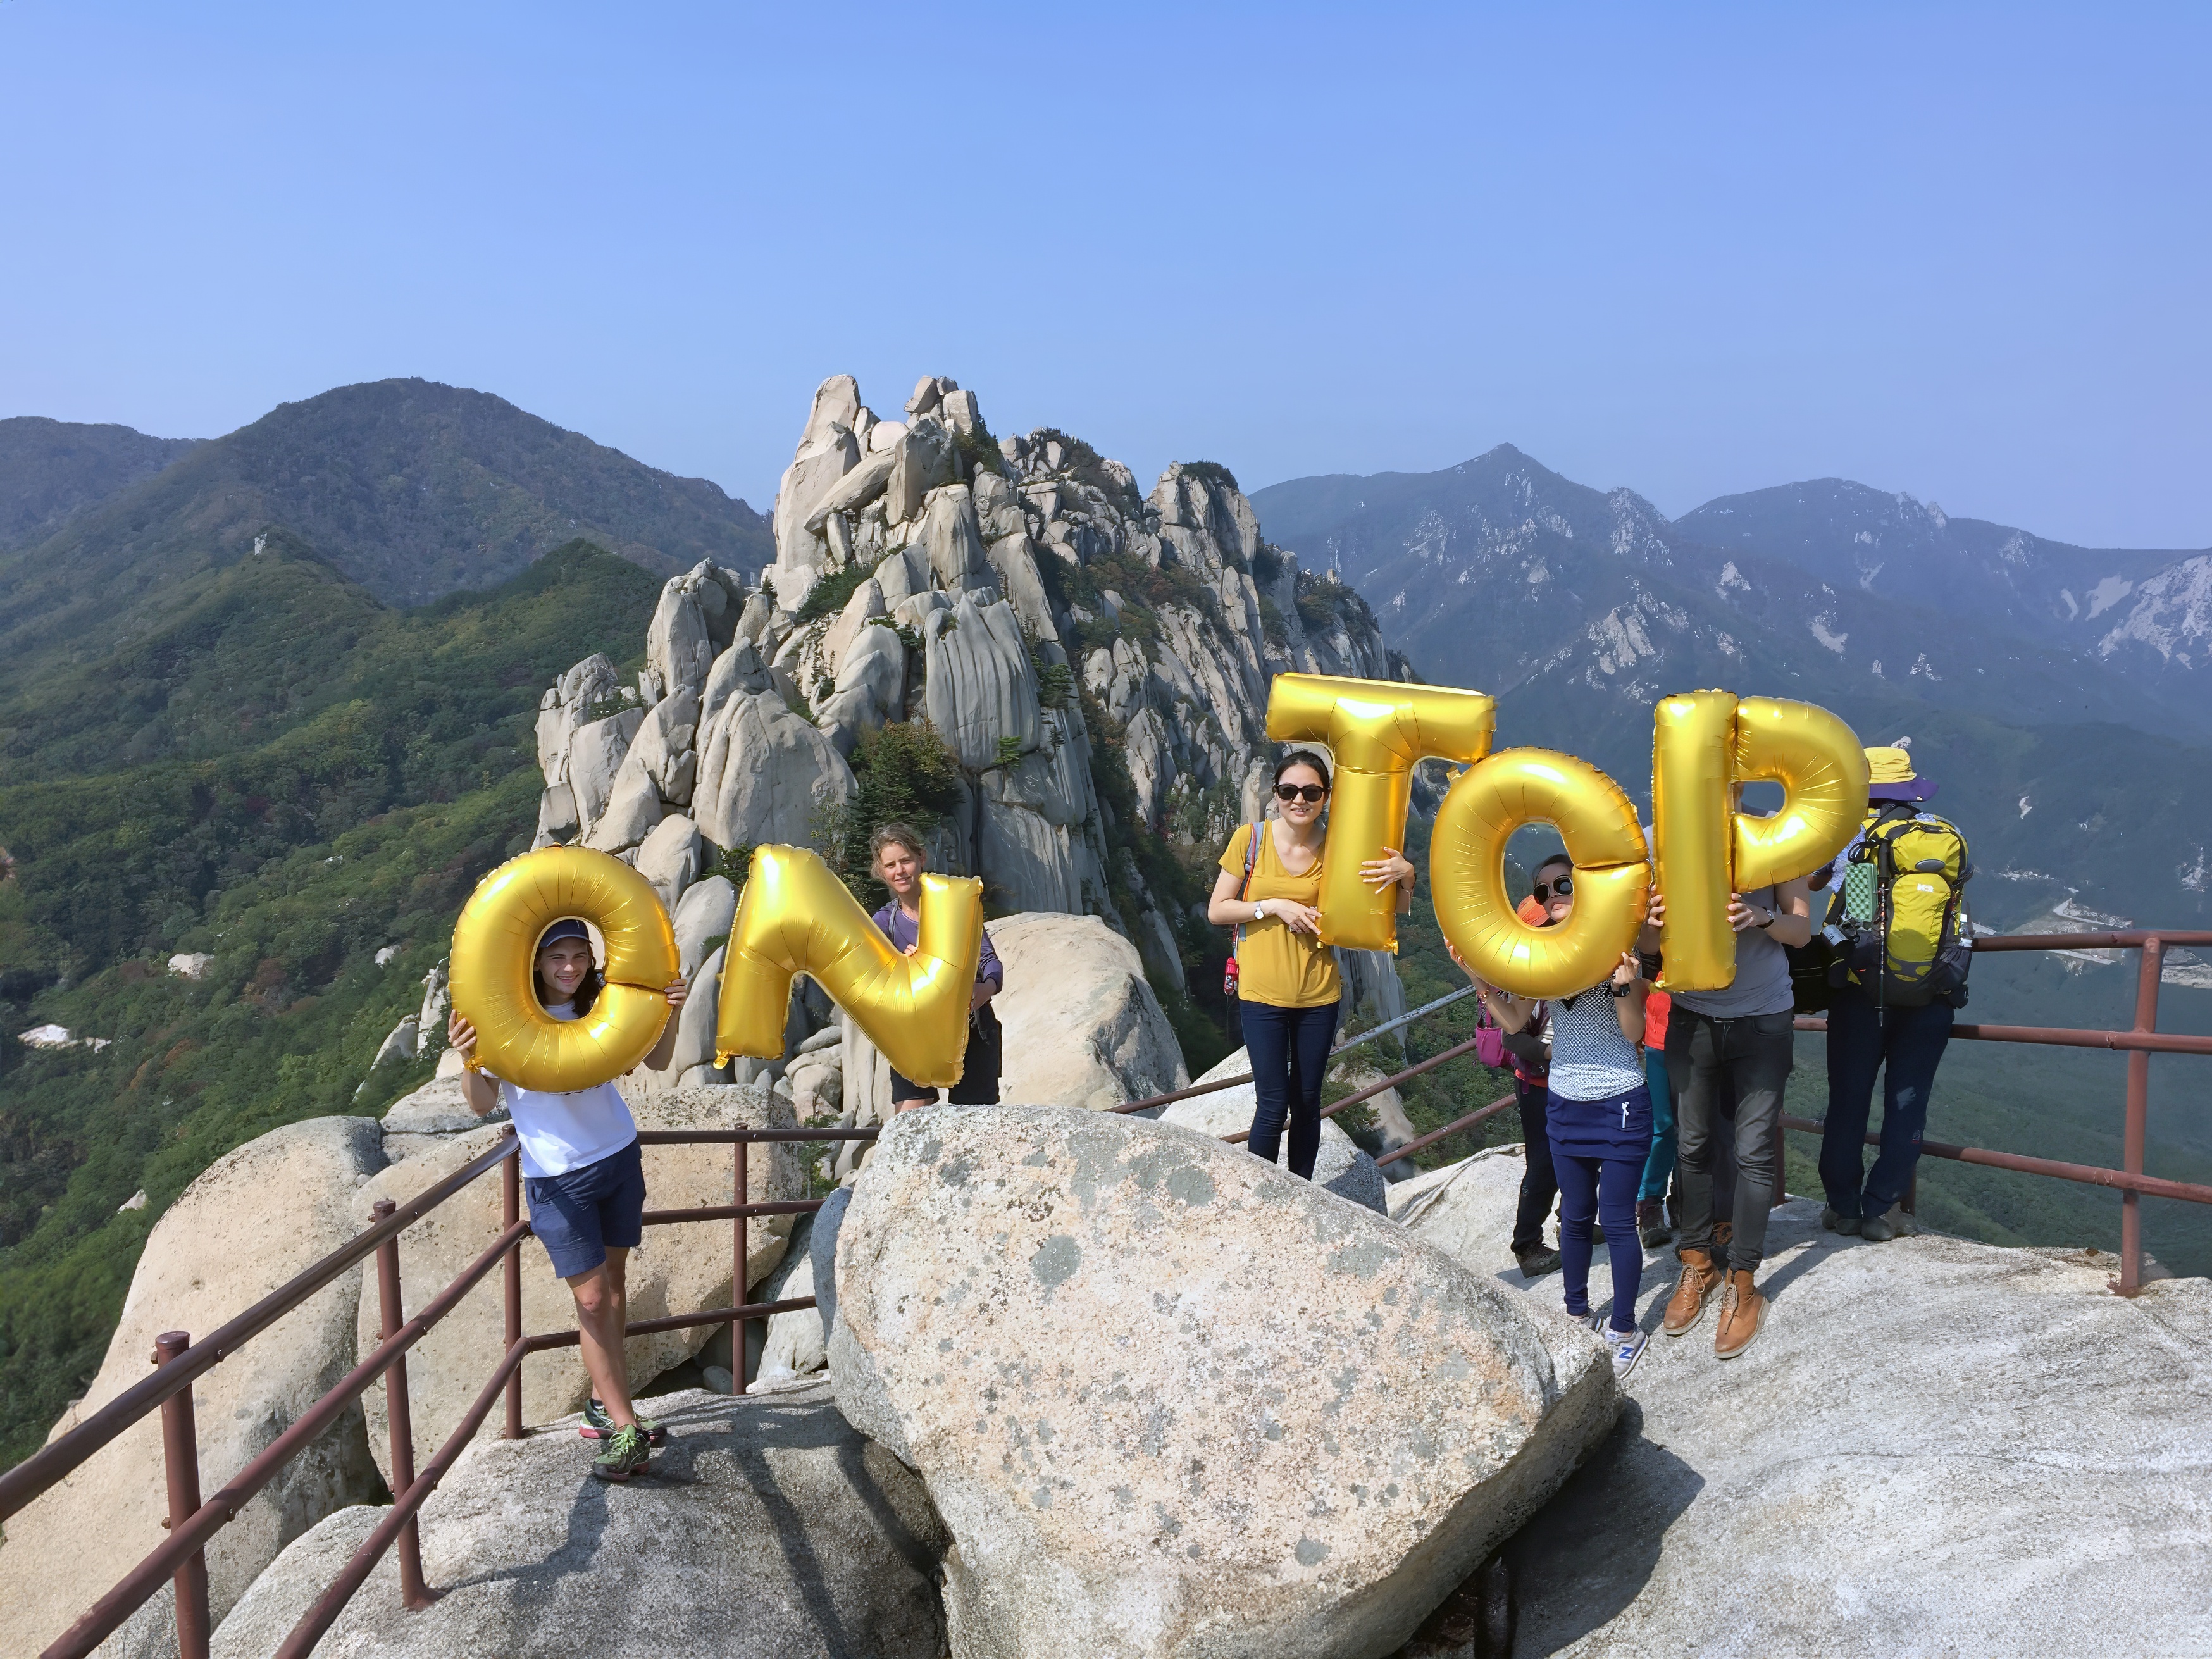 South Korea, Seoraksan National Park, Ulsanbawi Rock (울산바위) - On top, Silence was Golden, gold balloons